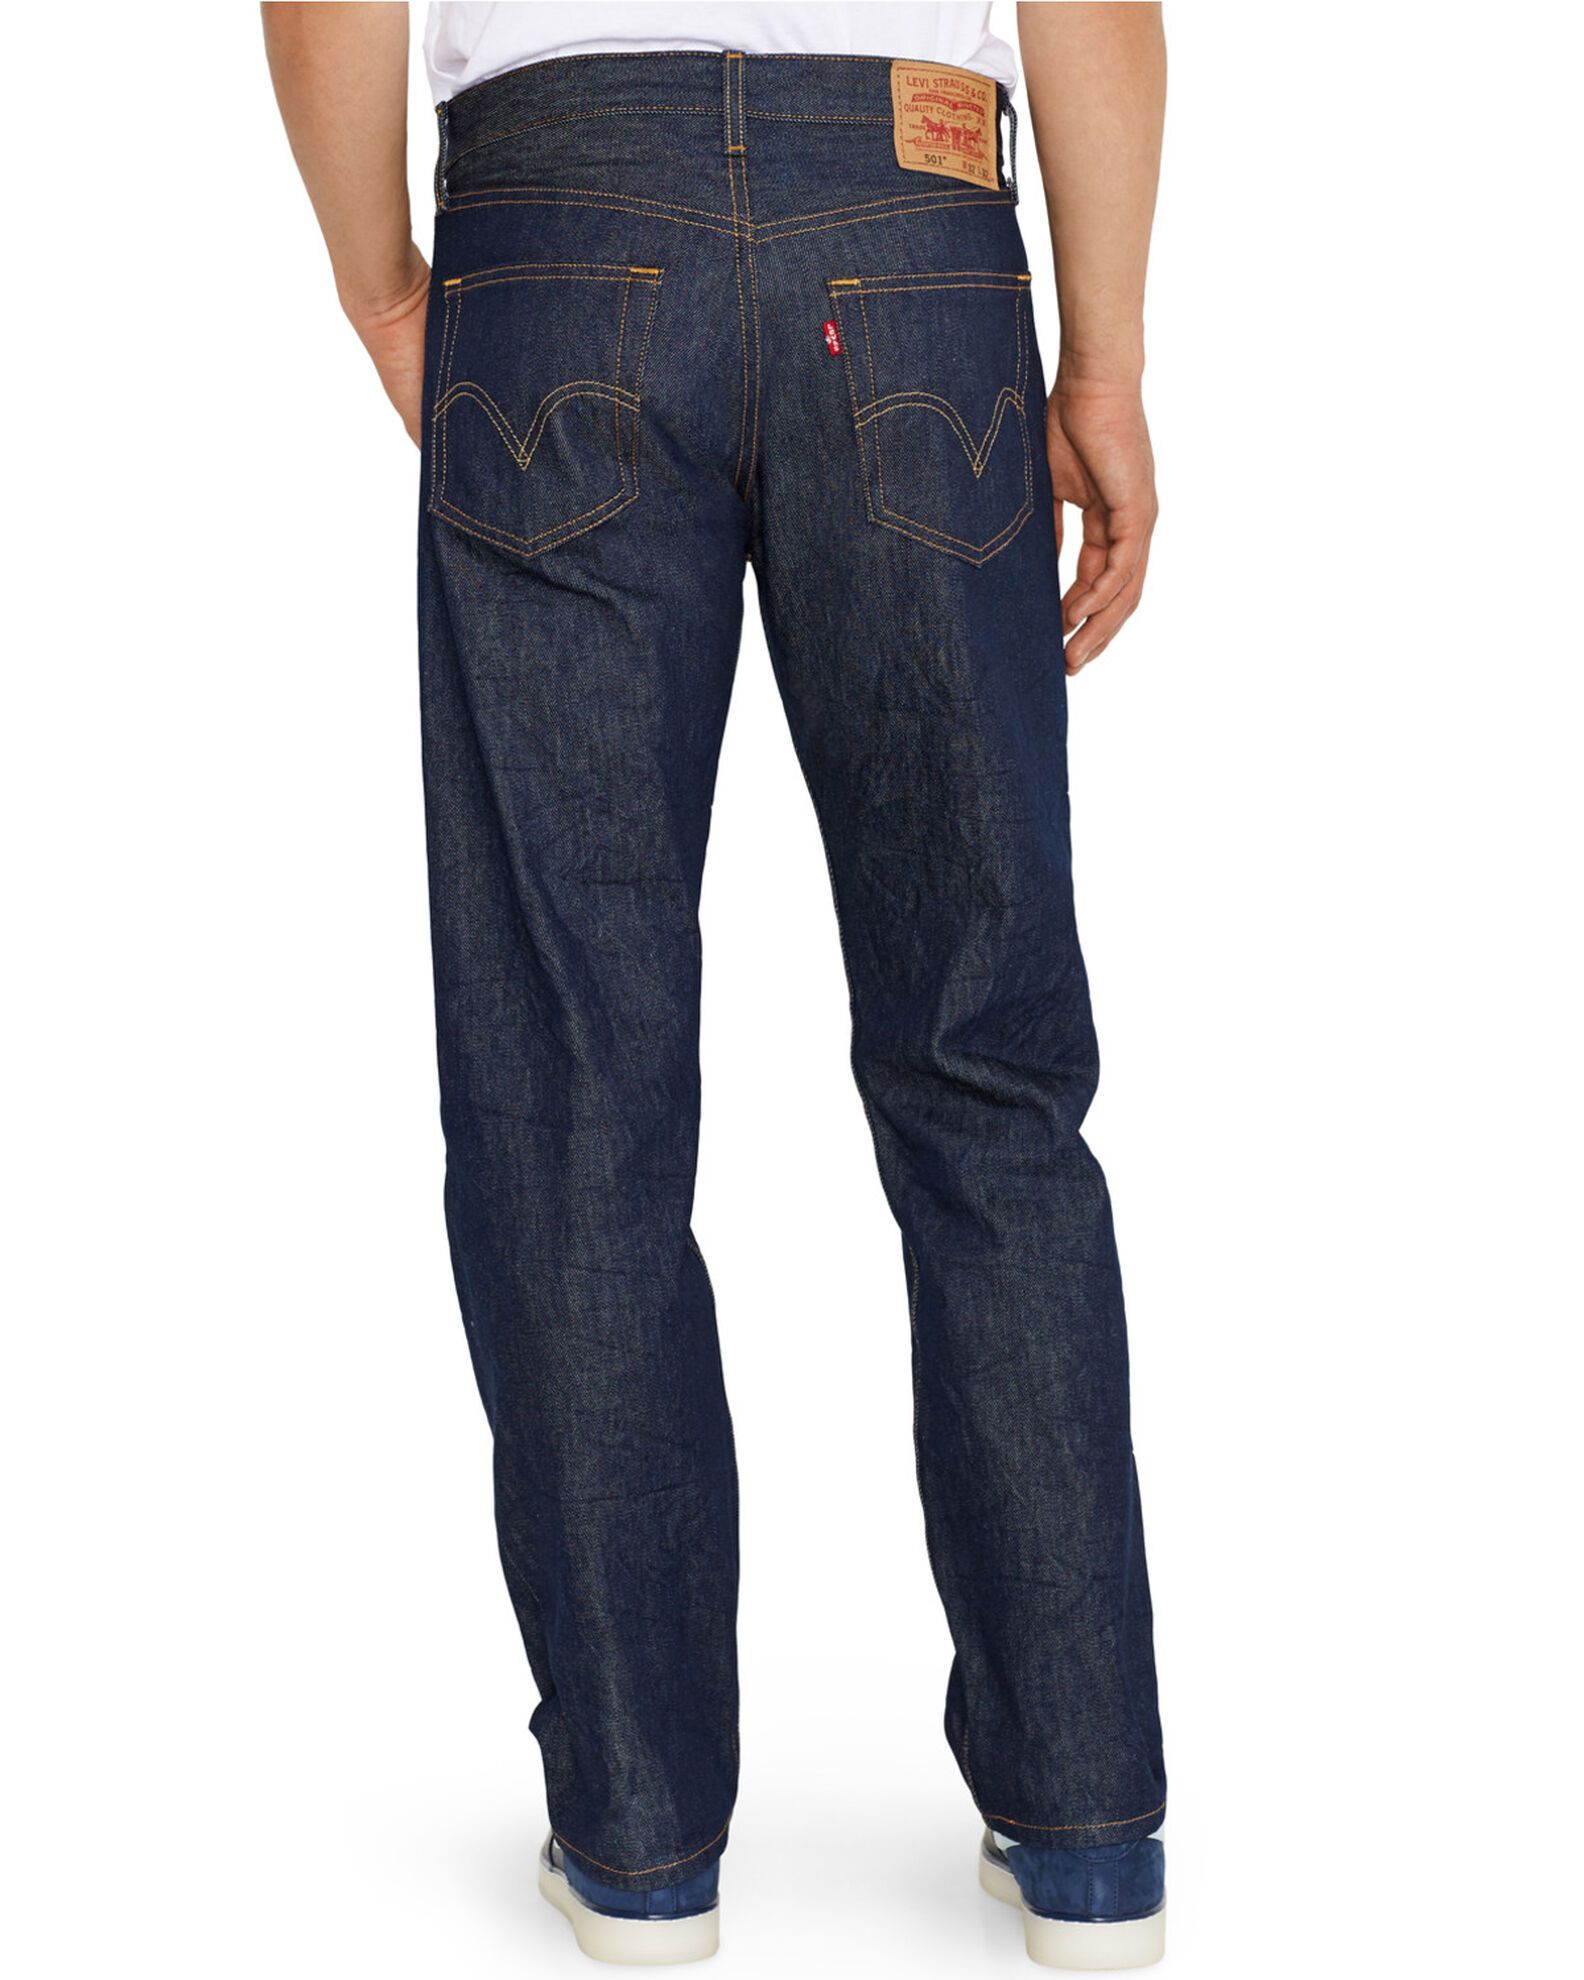 Fantastisch selecteer Bermad Levi's Men's 501 Original Shrink-to-Fit Regular Straight Leg Jeans -  Country Outfitter